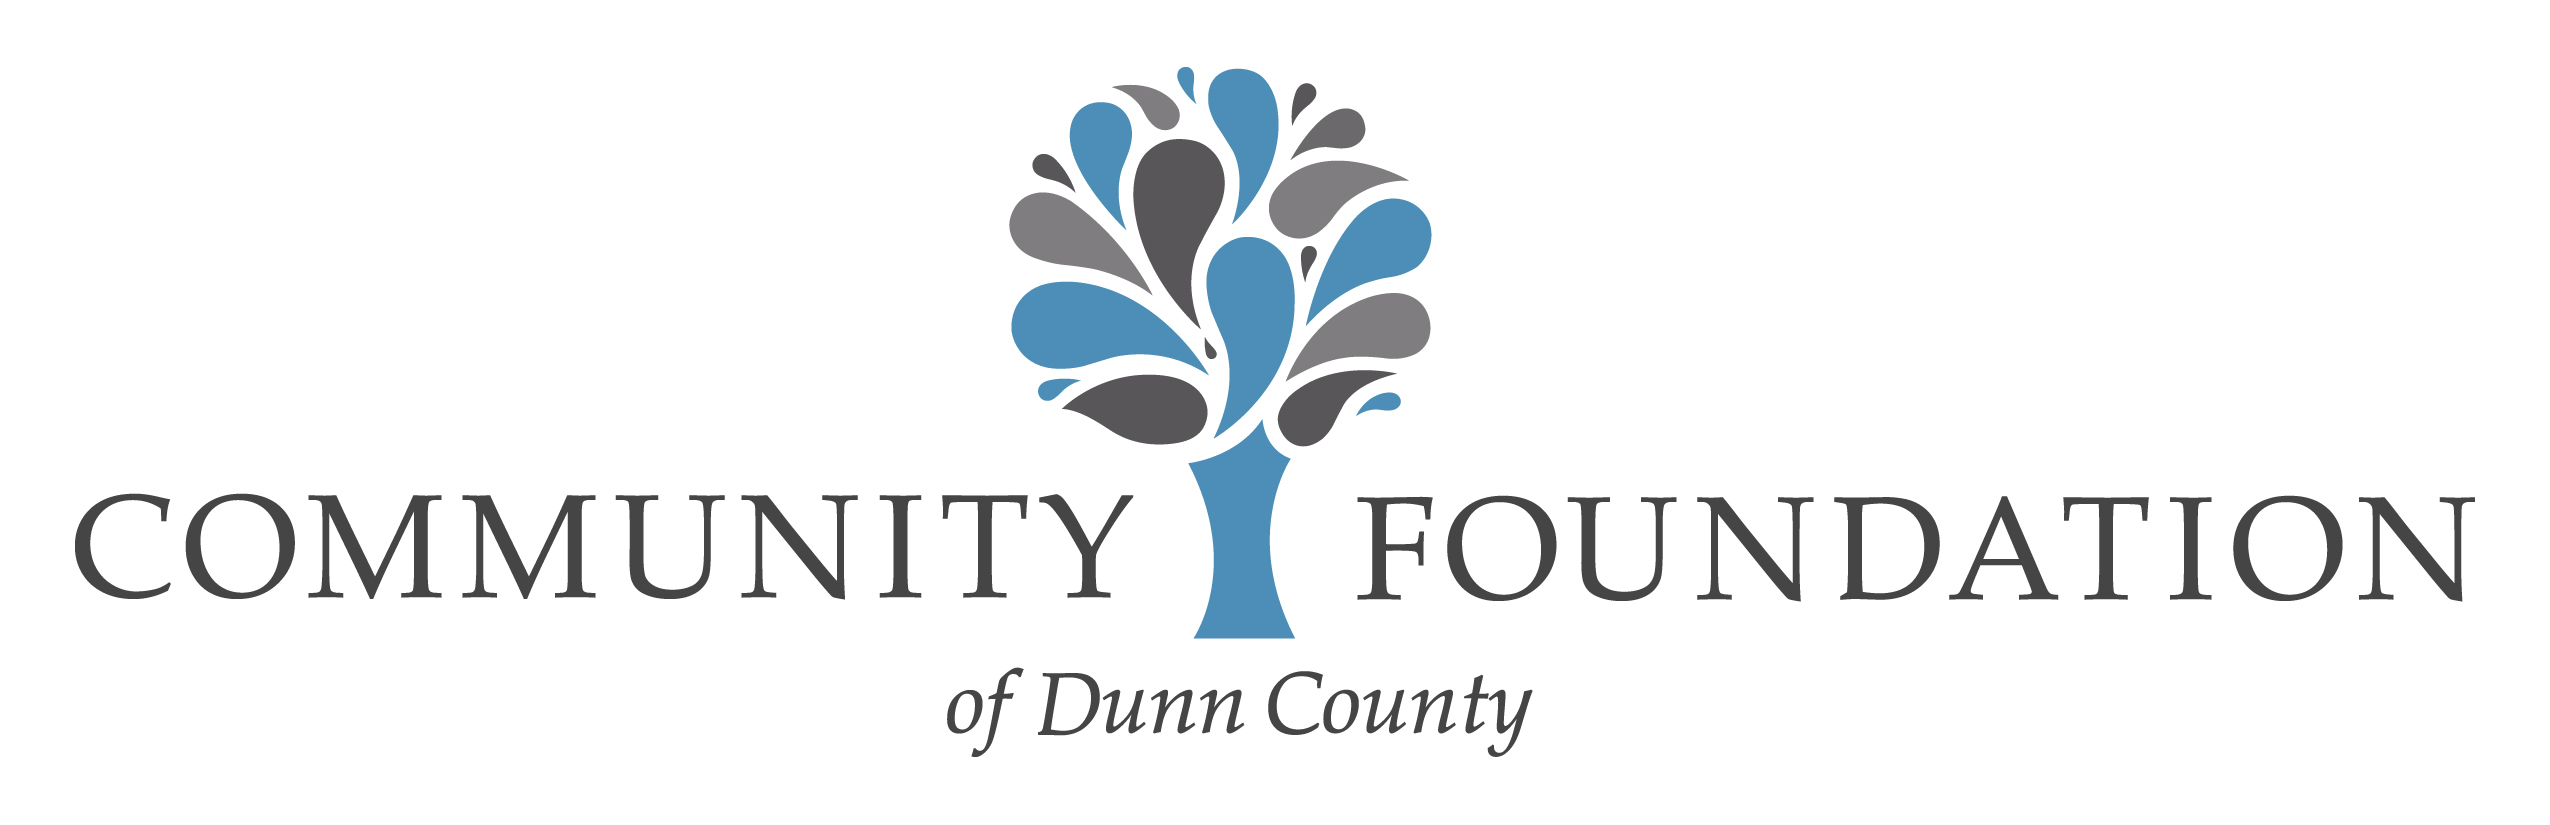 Community Foundation of Dunn County